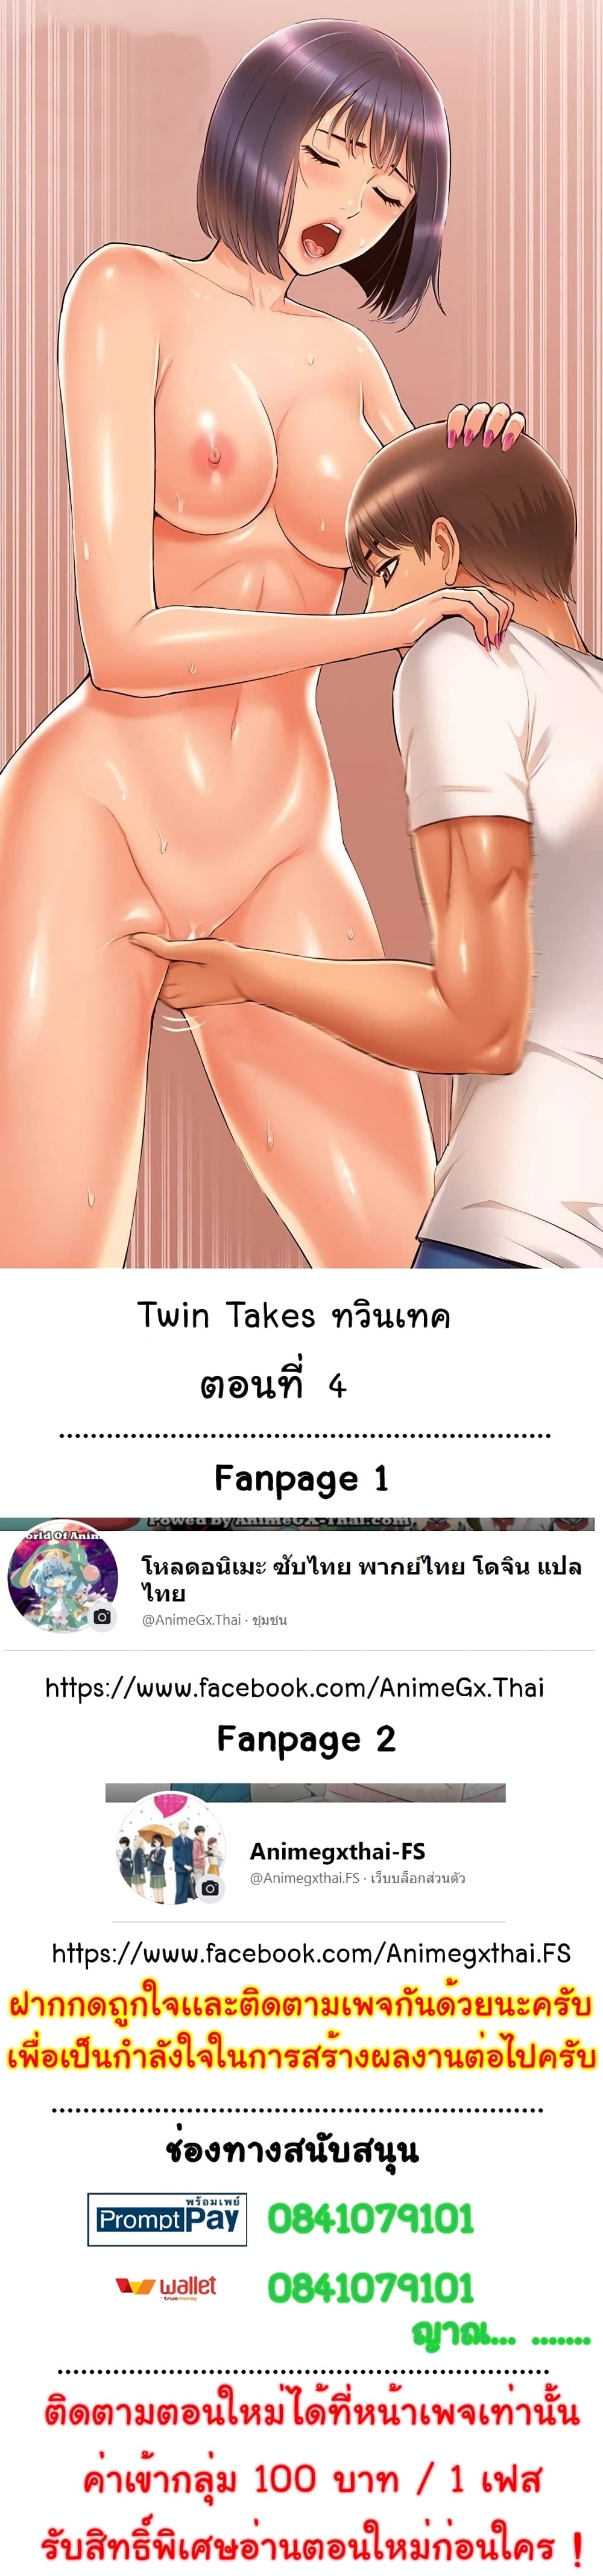 Twin Takes 4-4